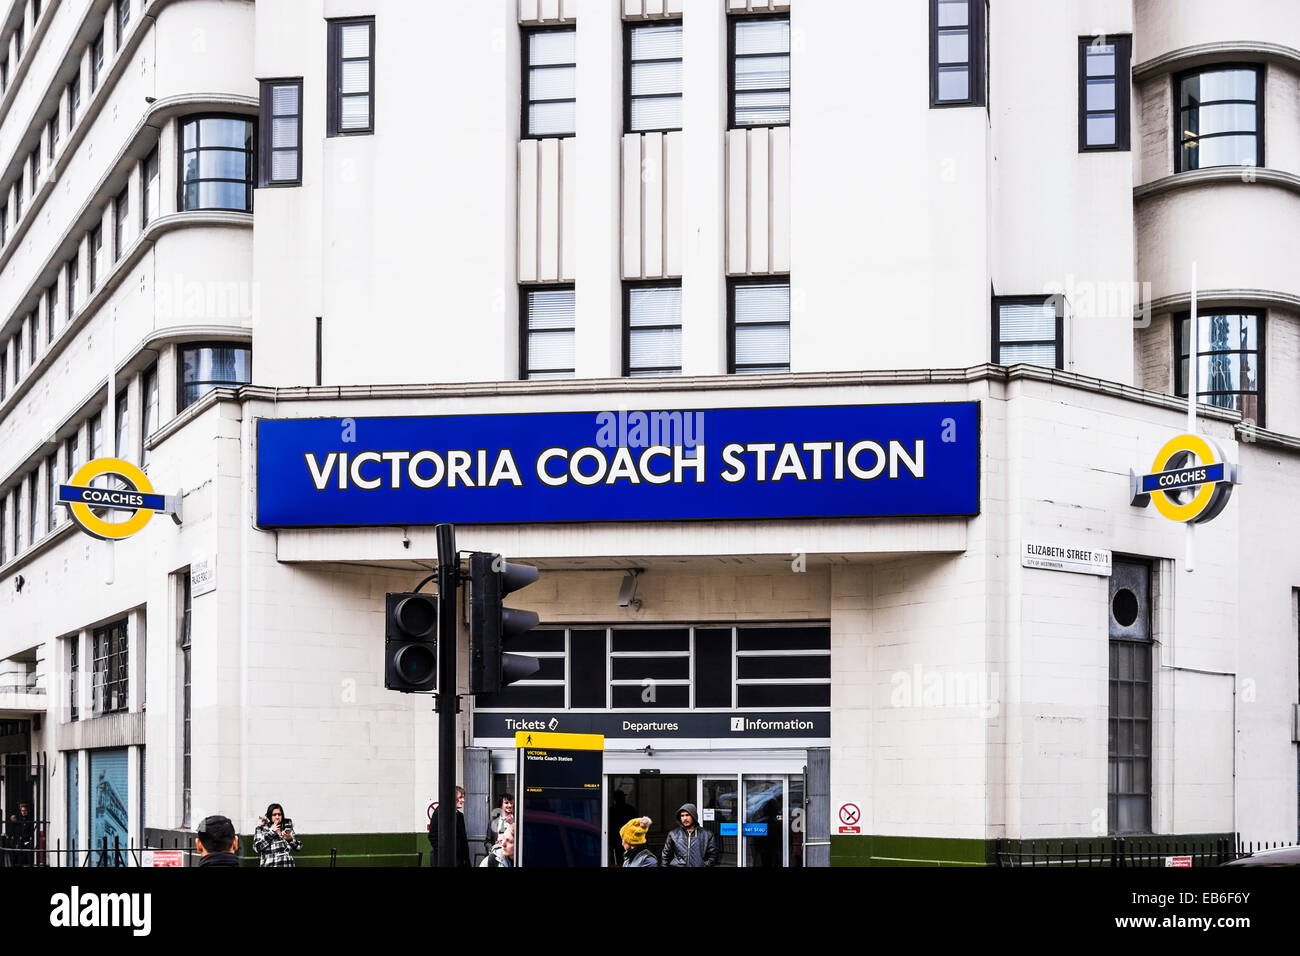 Victoria Coach Station - London Stock Photo